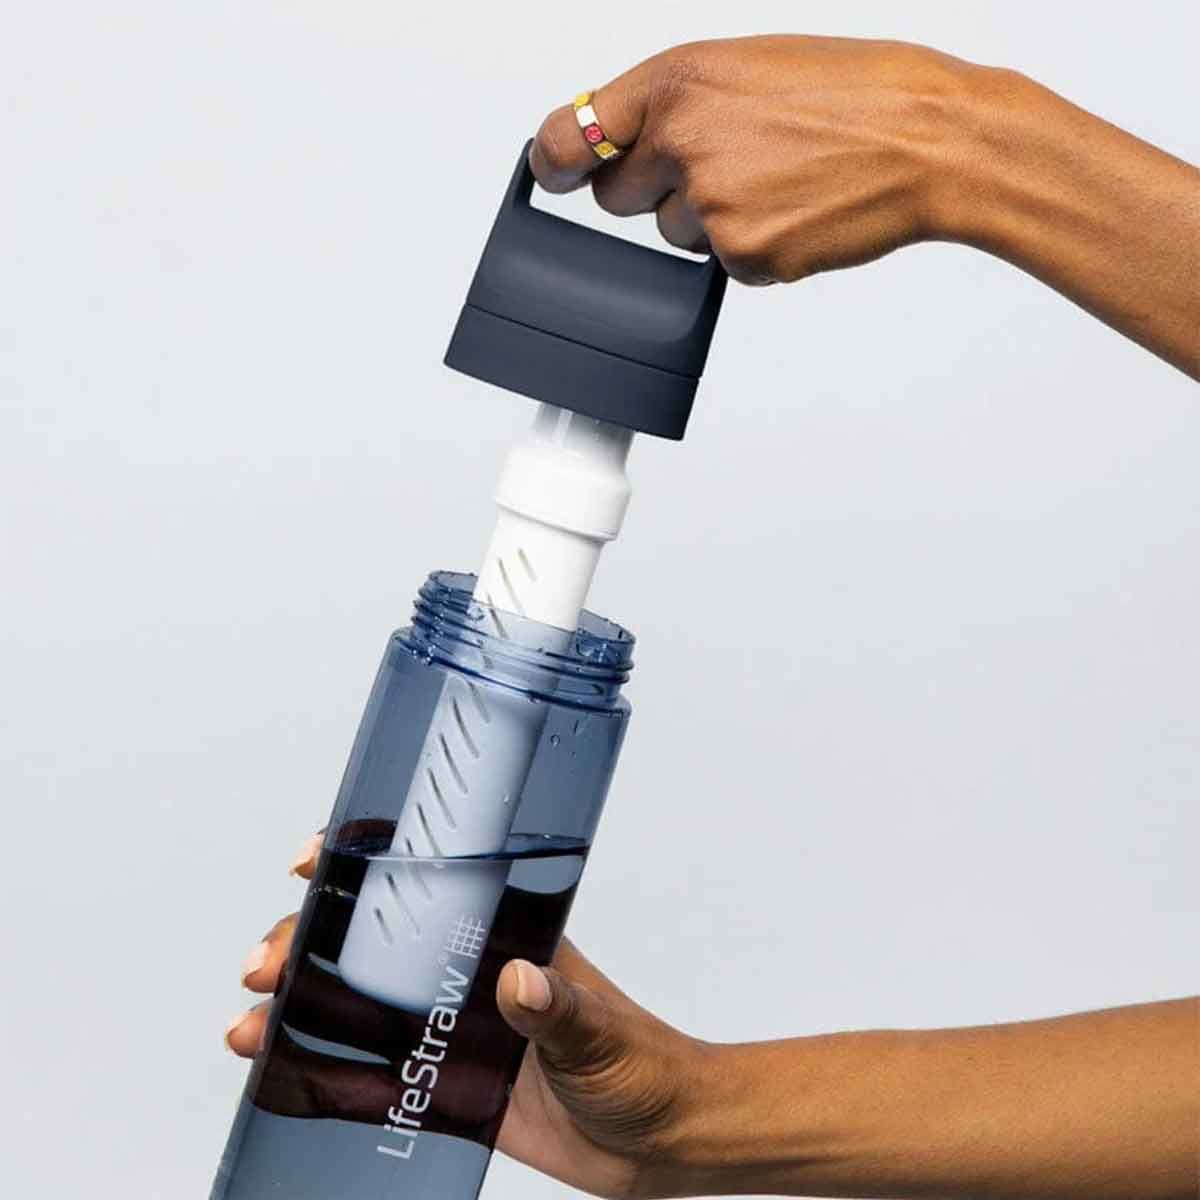 Botella filtrante LifeStraw Go - Carbón activo - 0,65 L